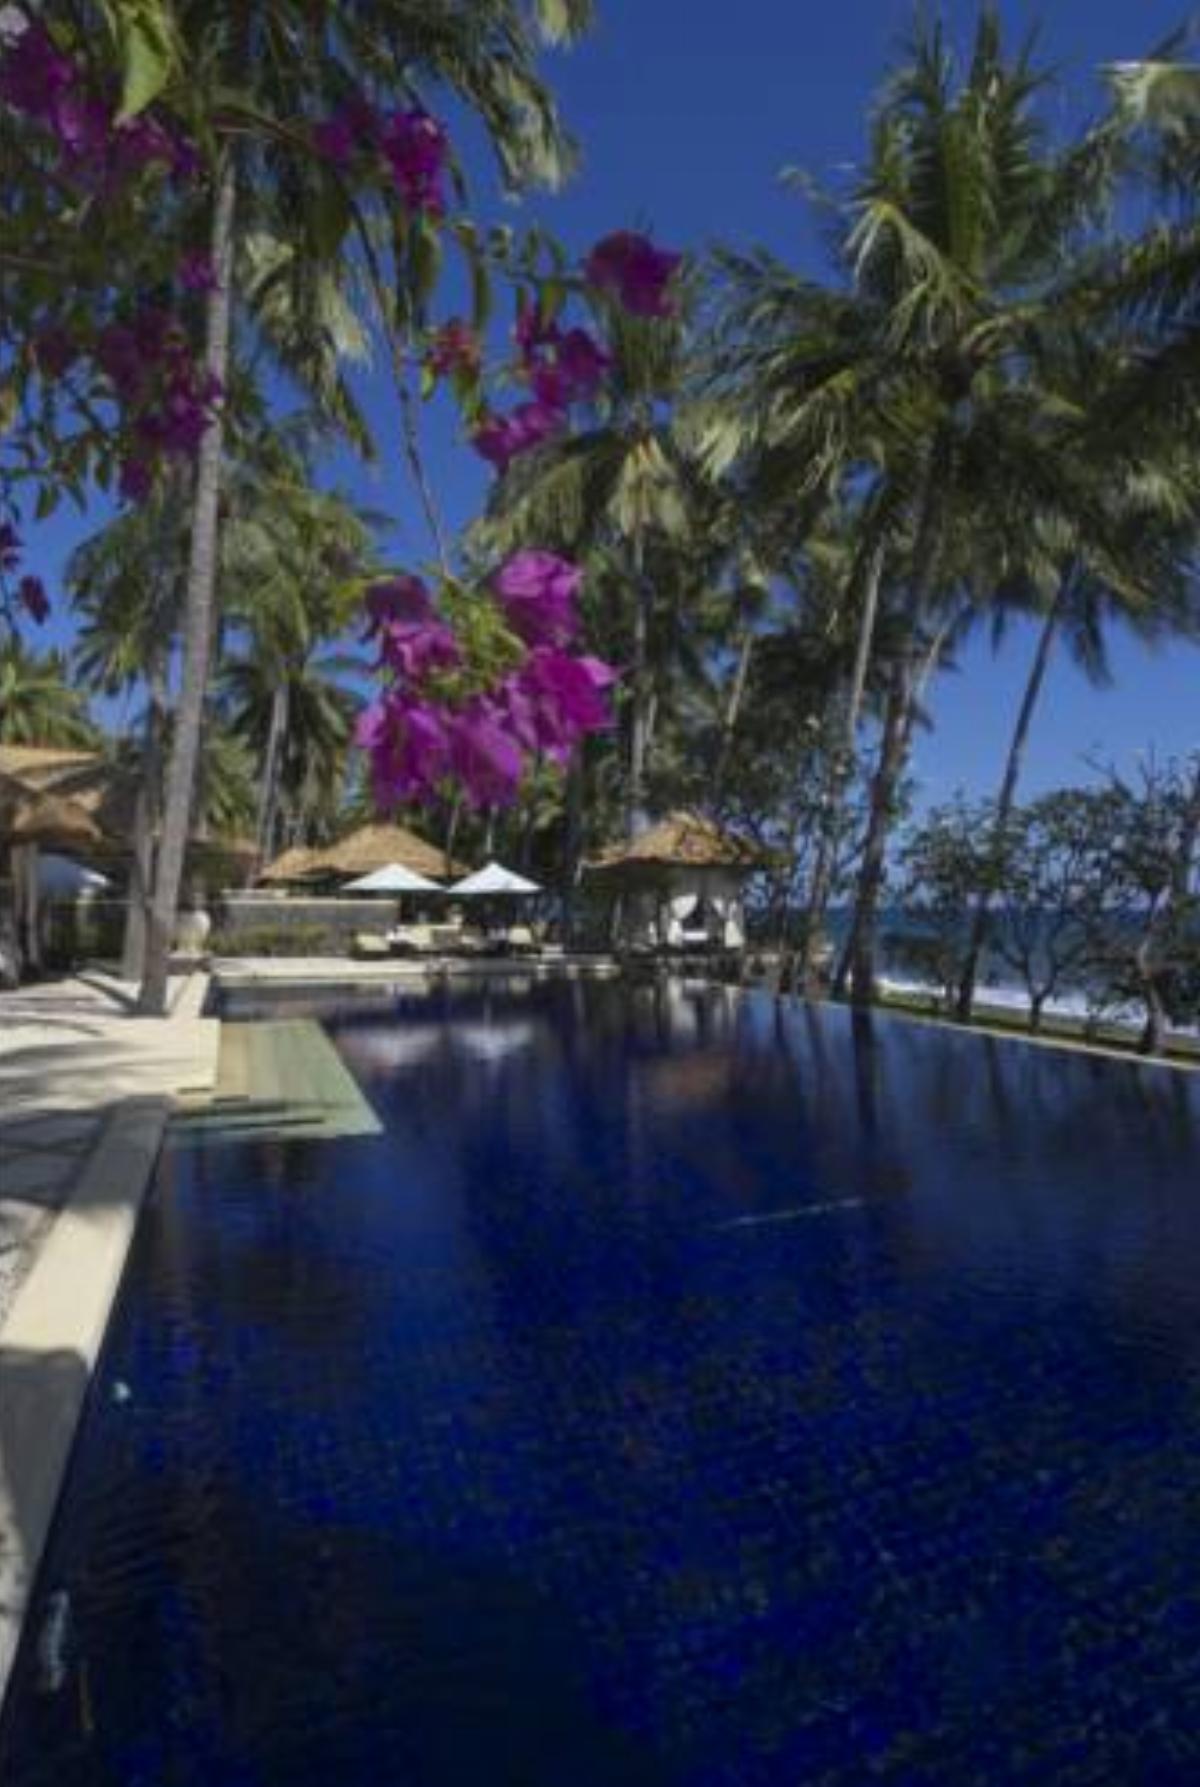 Spa Village Resort Tembok Bali Hotel Gretek Indonesia